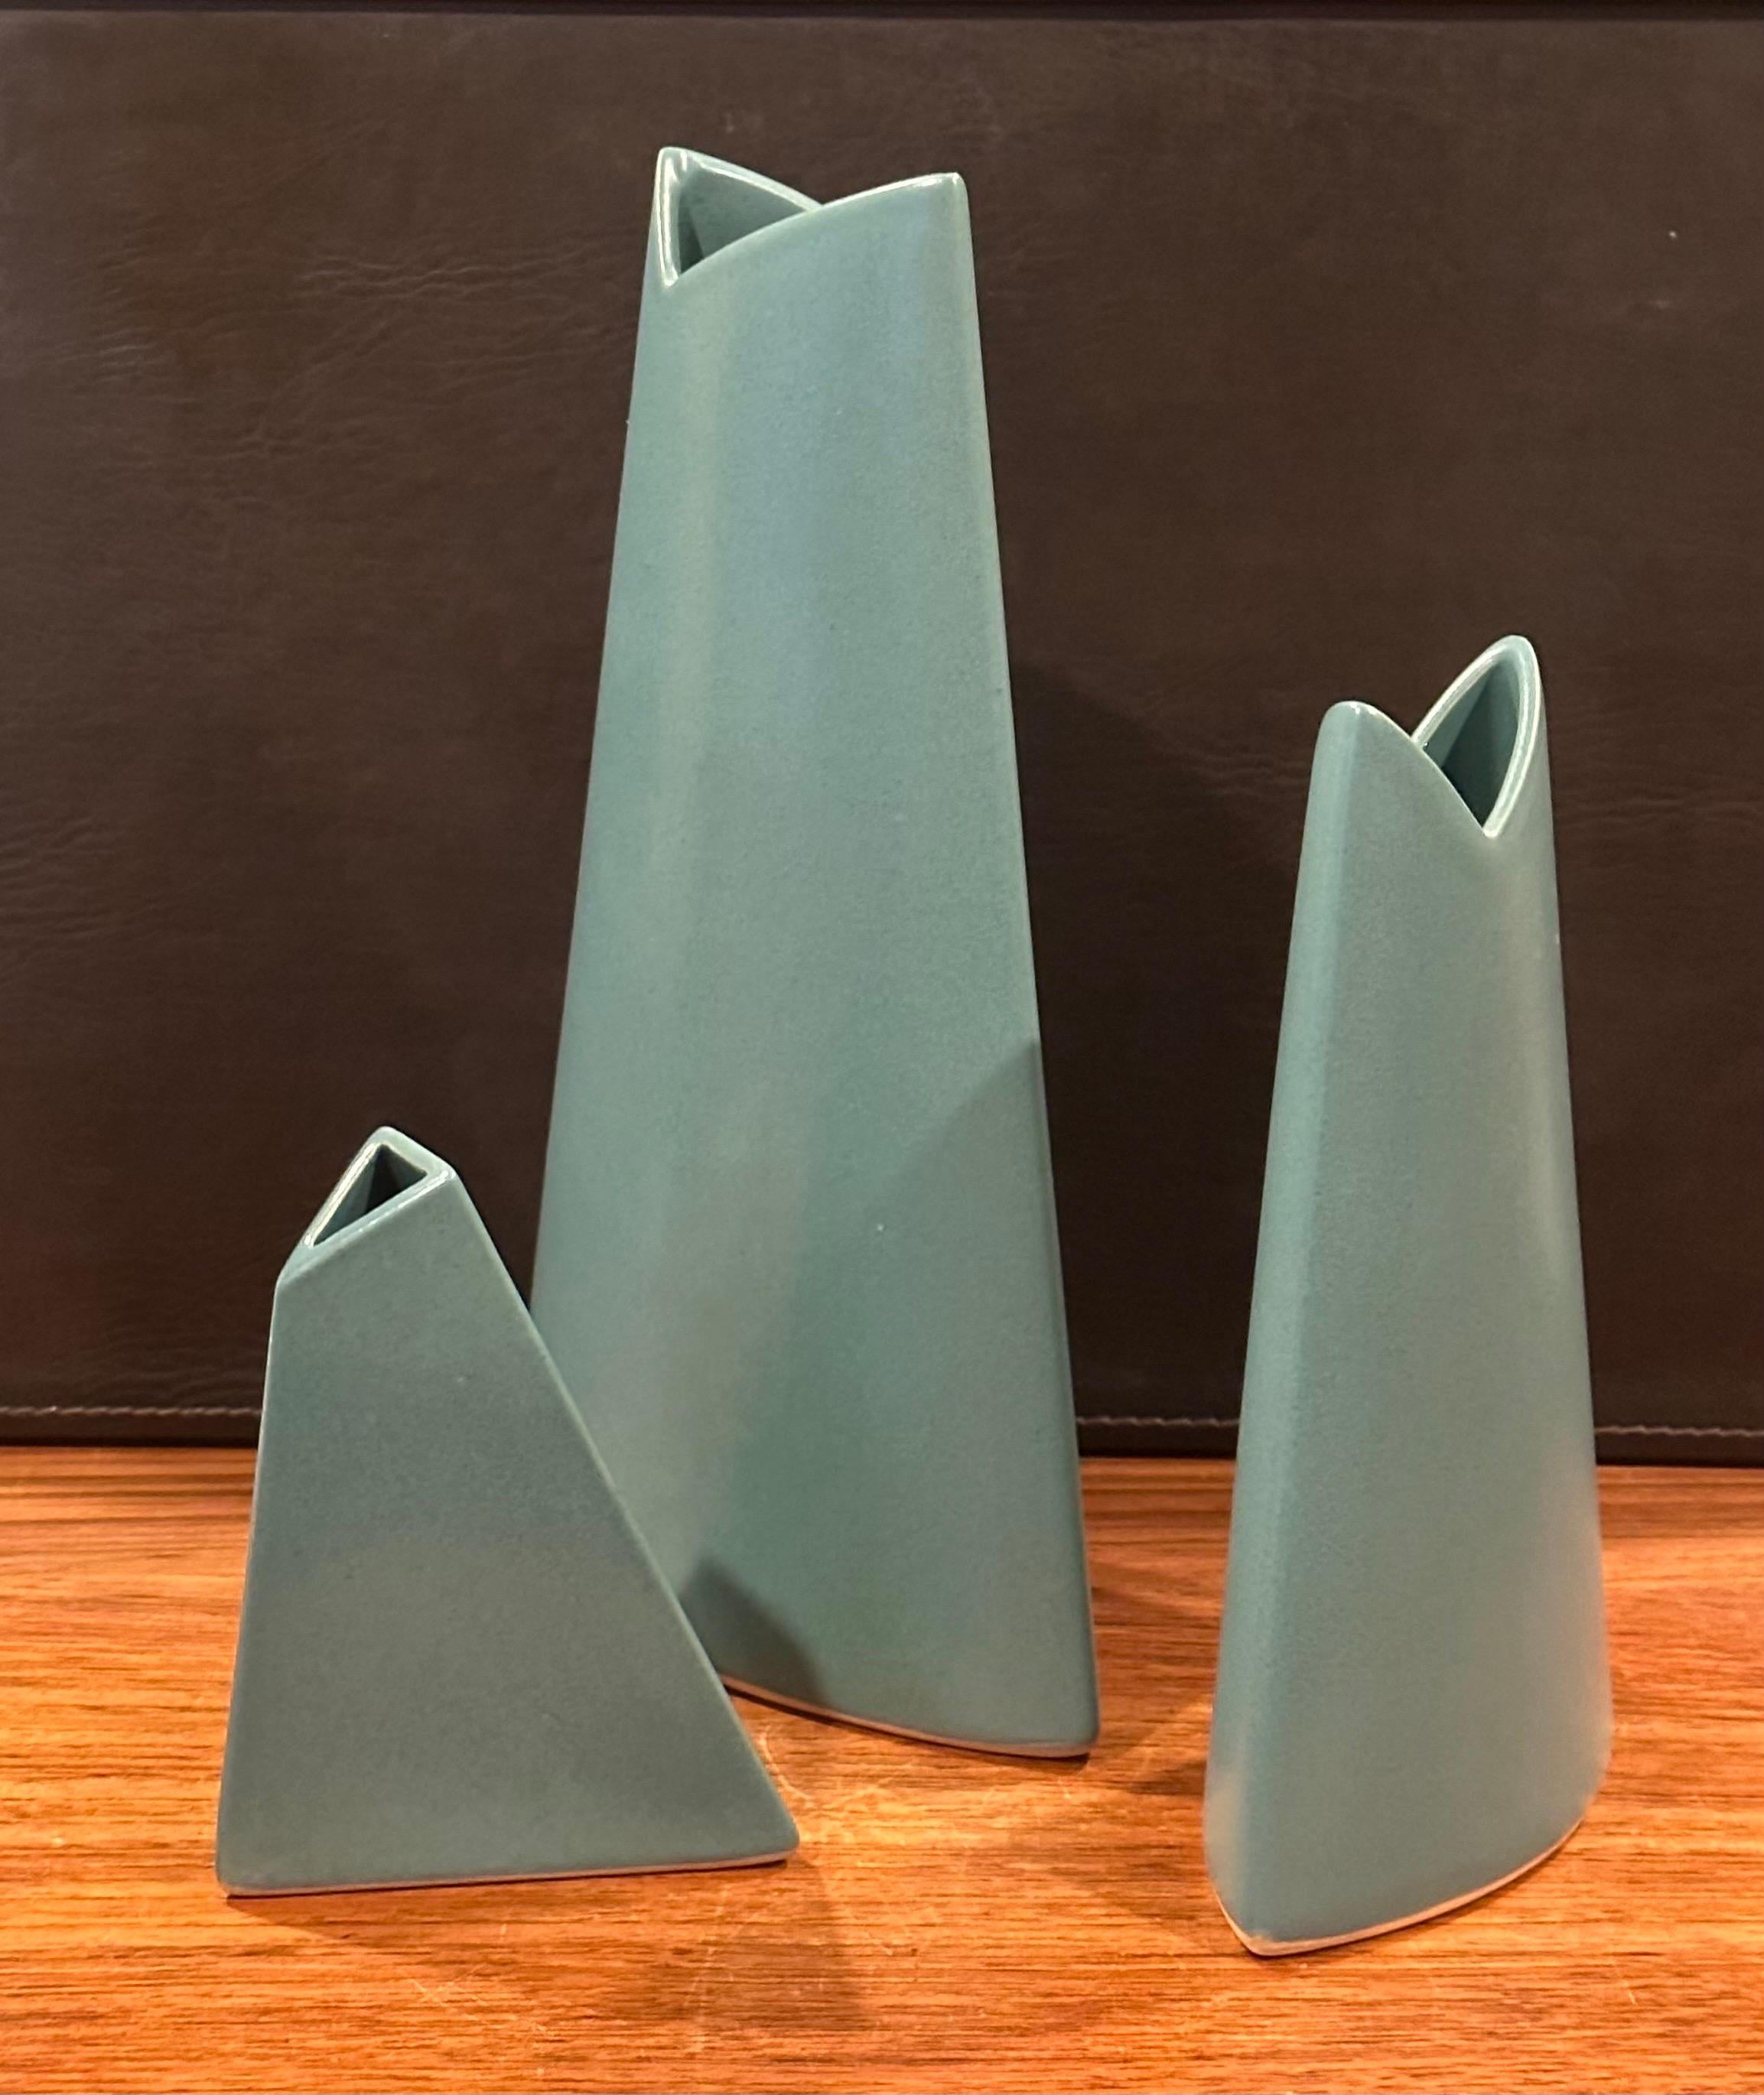 Glazed Set of Three Post-Modern Geometric Ceramic Vases by James Johnston For Sale